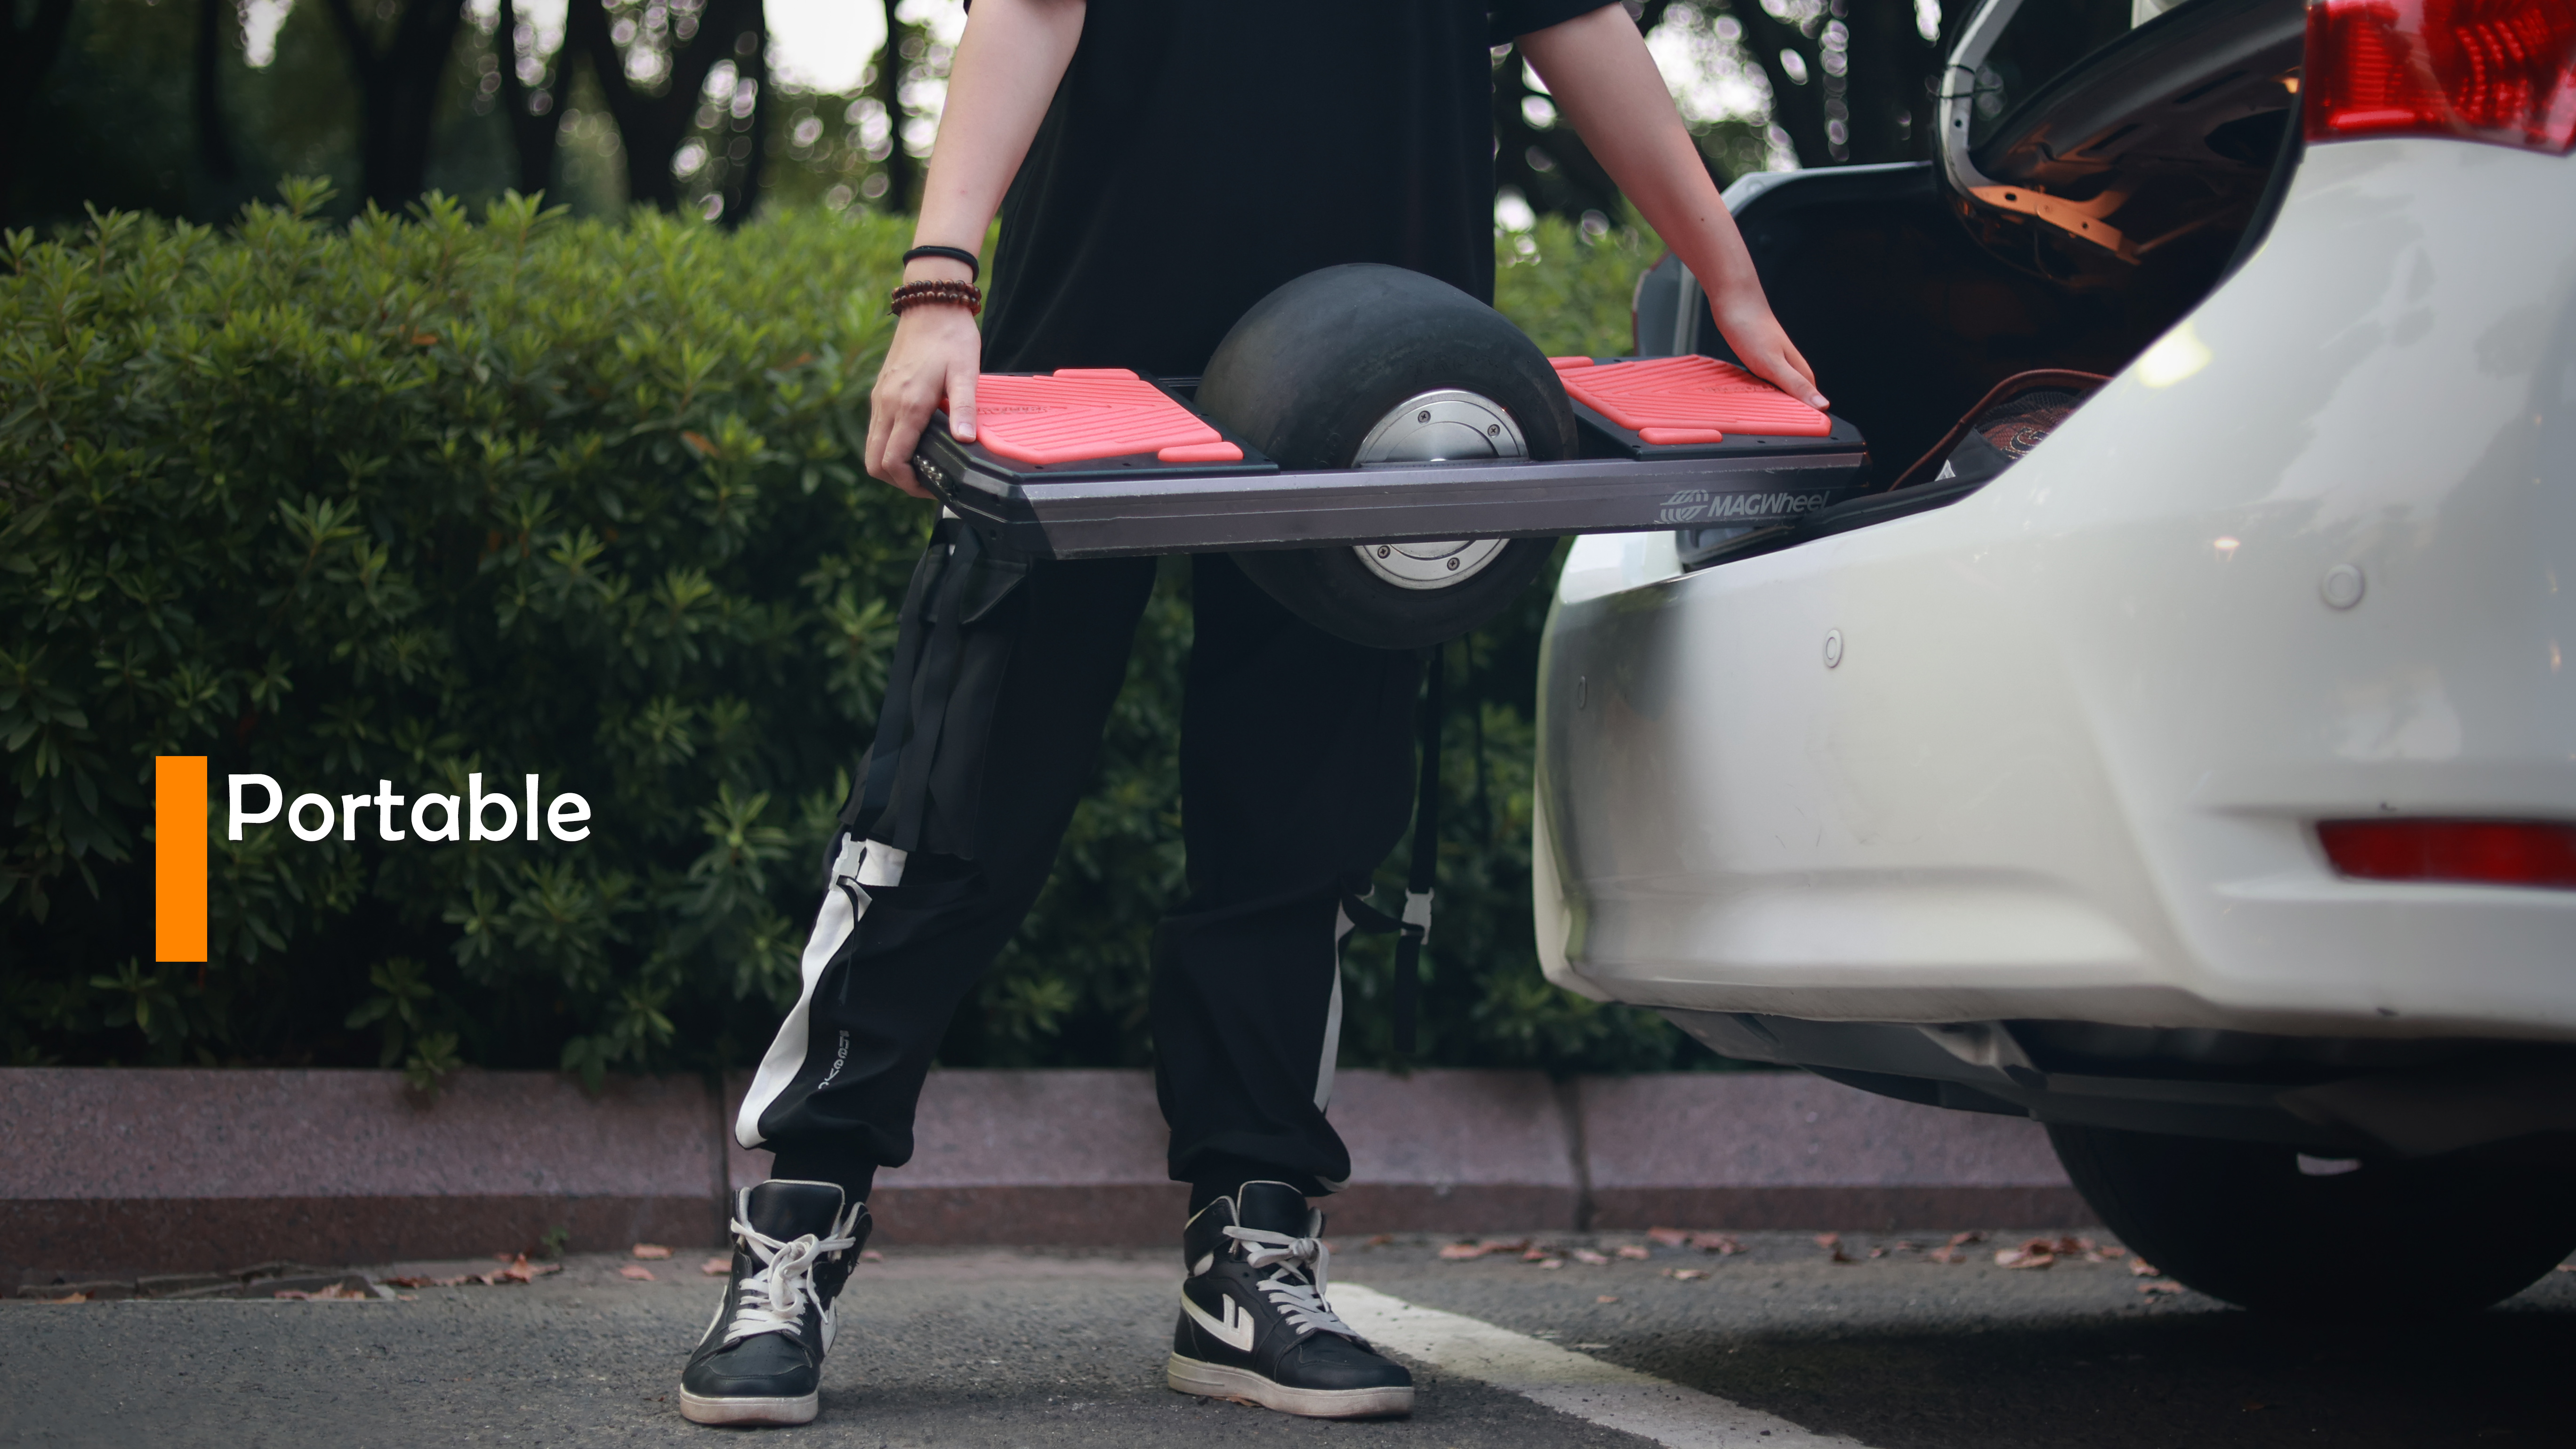 MAGWheel one wheel skateboard is super portable